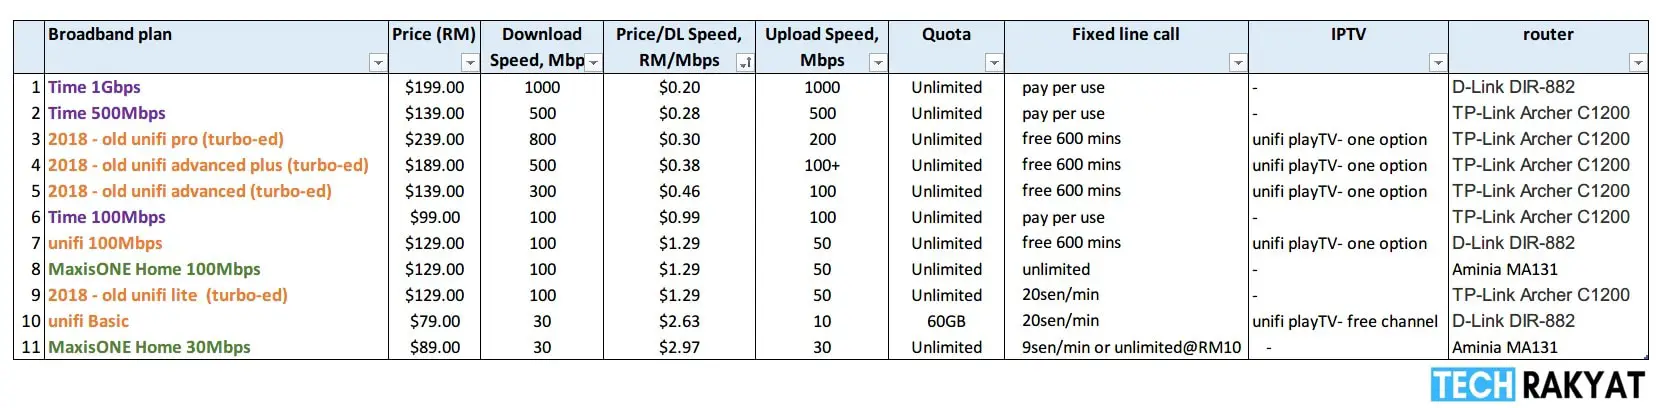 Best Broadband Plan Comparison Of Unifi Maxis Time Fibre In